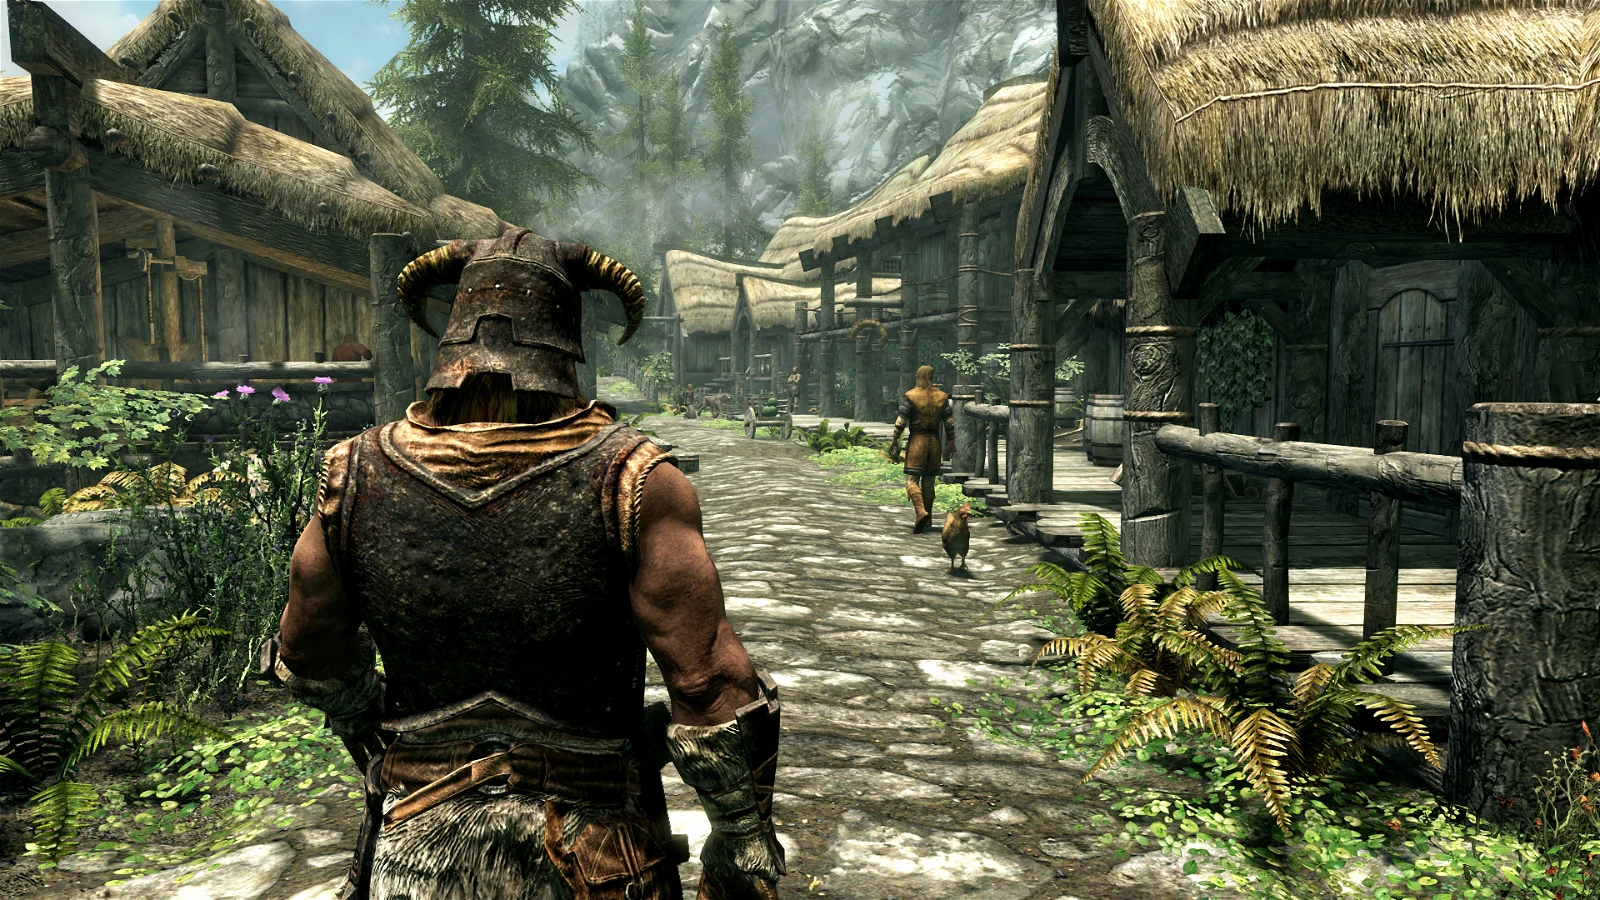 An in-game screenshot from Elder Scrolls V: Skyrim